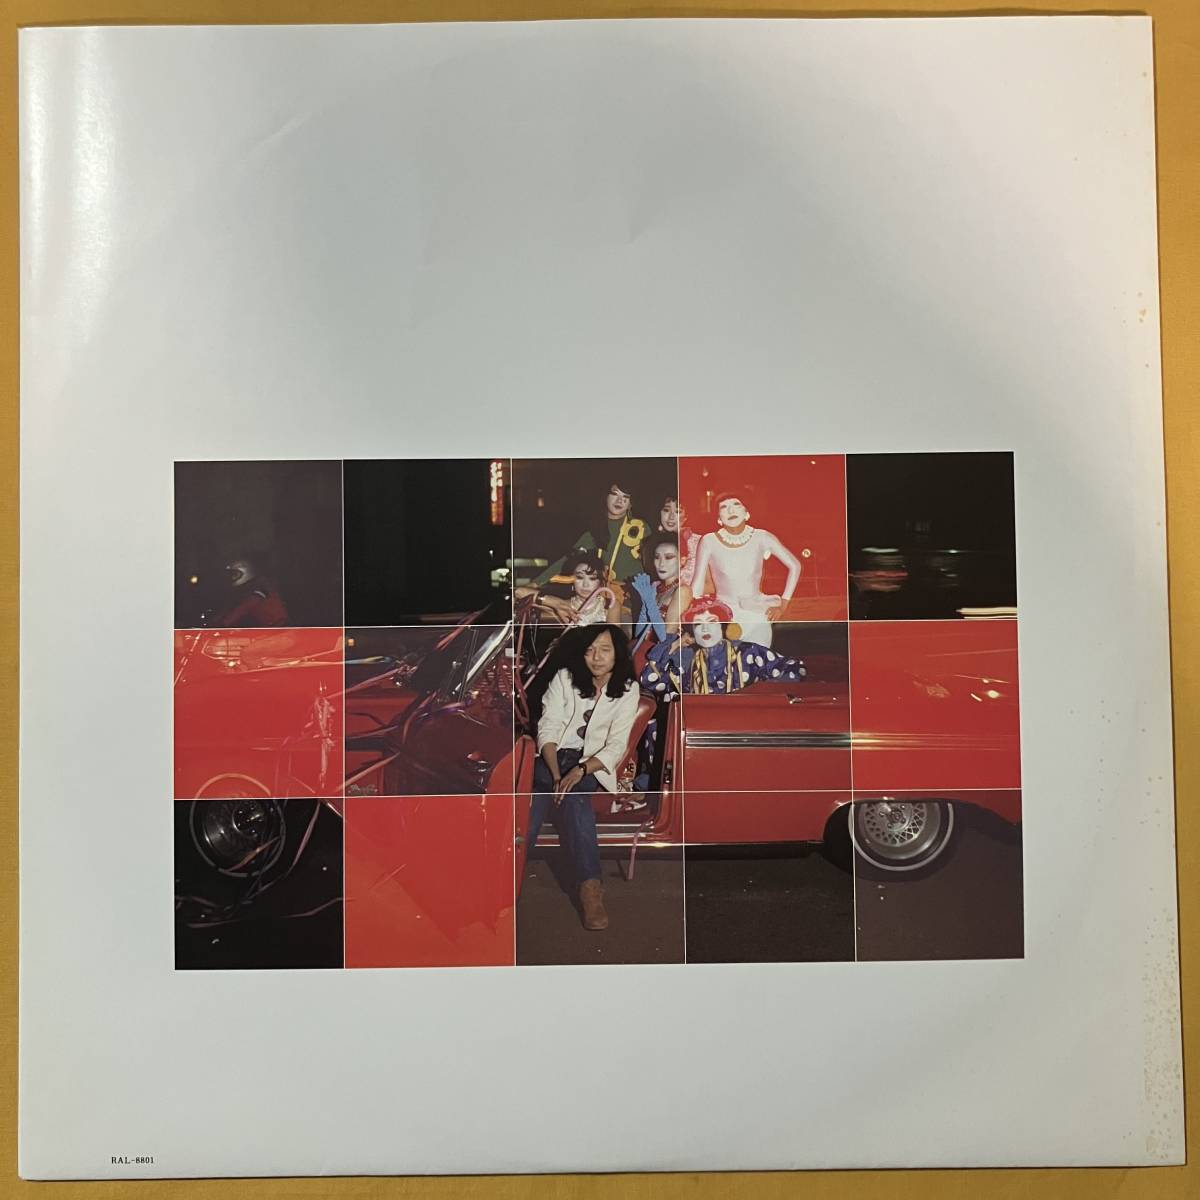 01H 初版 オリジナル盤 当時モノ CITYPOP 山下達郎 TATSURO YAMASHITA / フォーユー FOR YOU RAL-8801 LP レコード アナログ盤の画像3